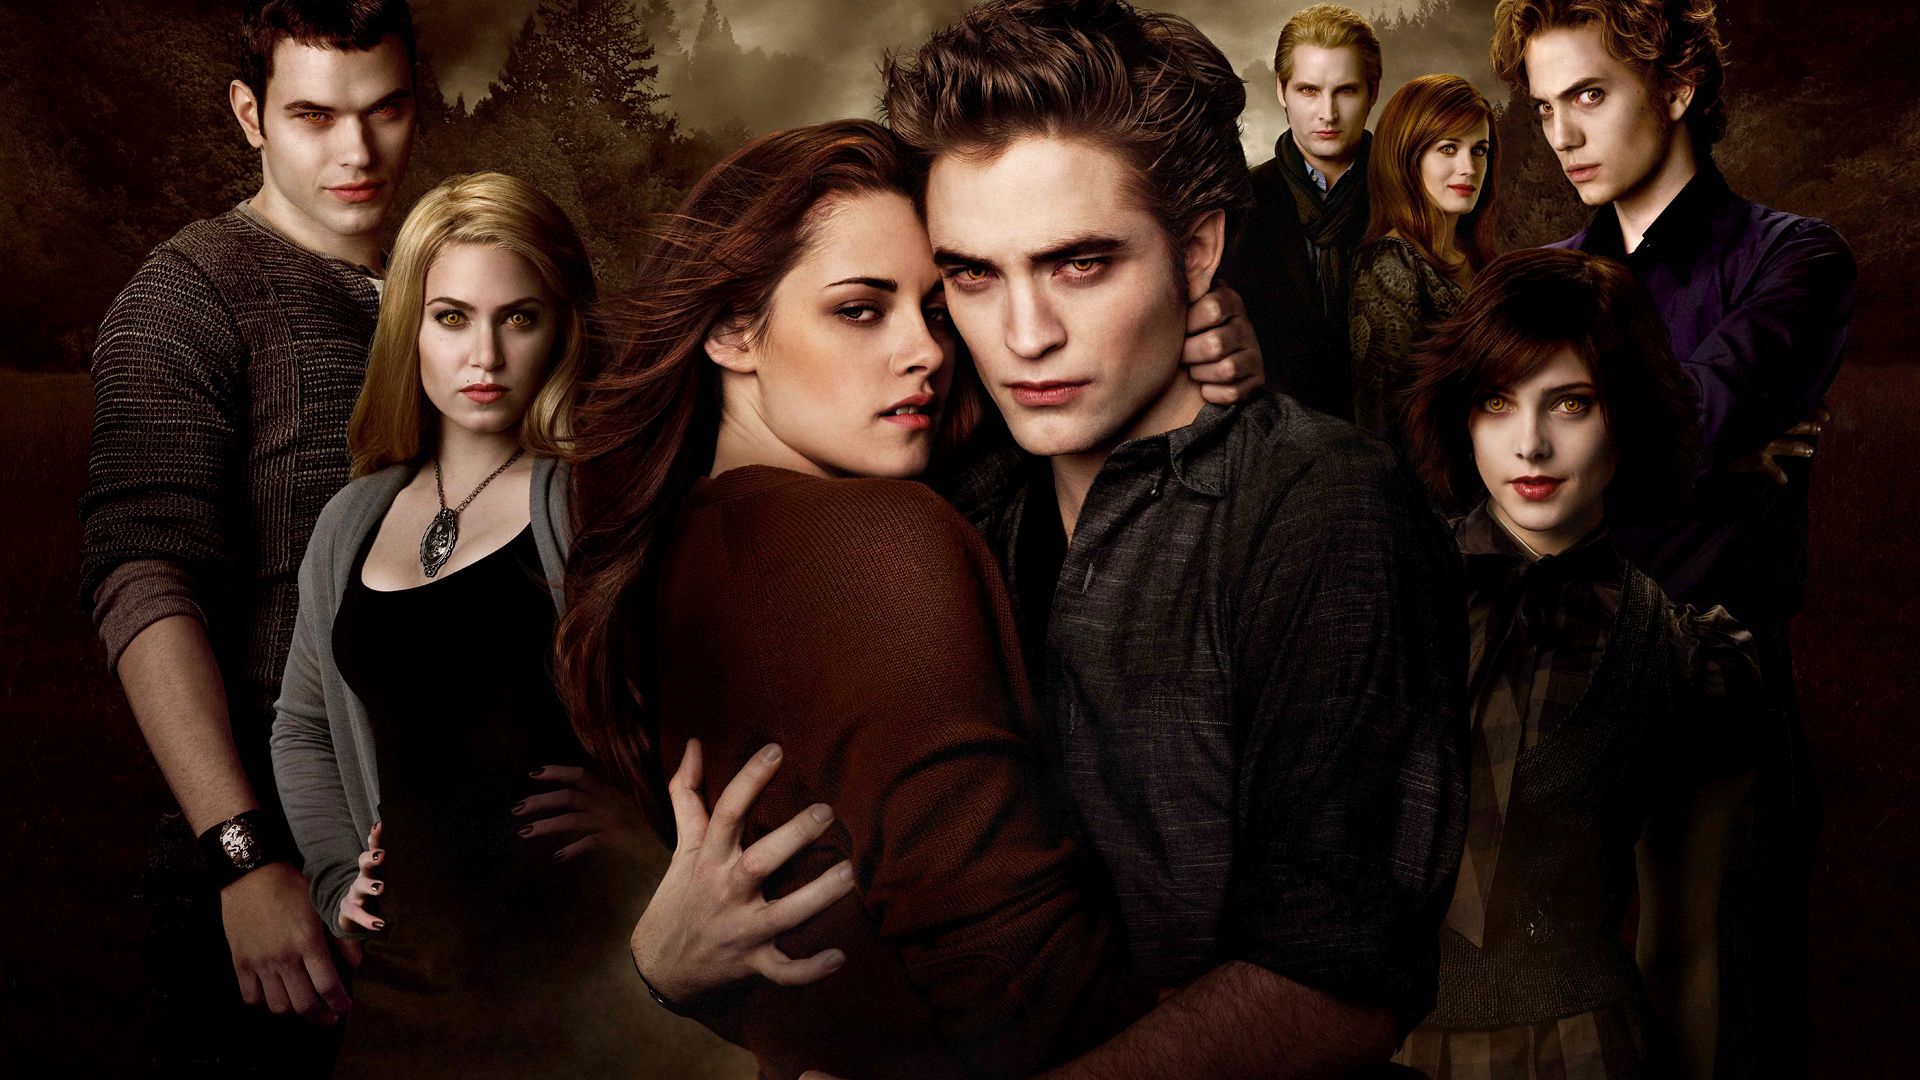 The Twilight Saga: New Moon background